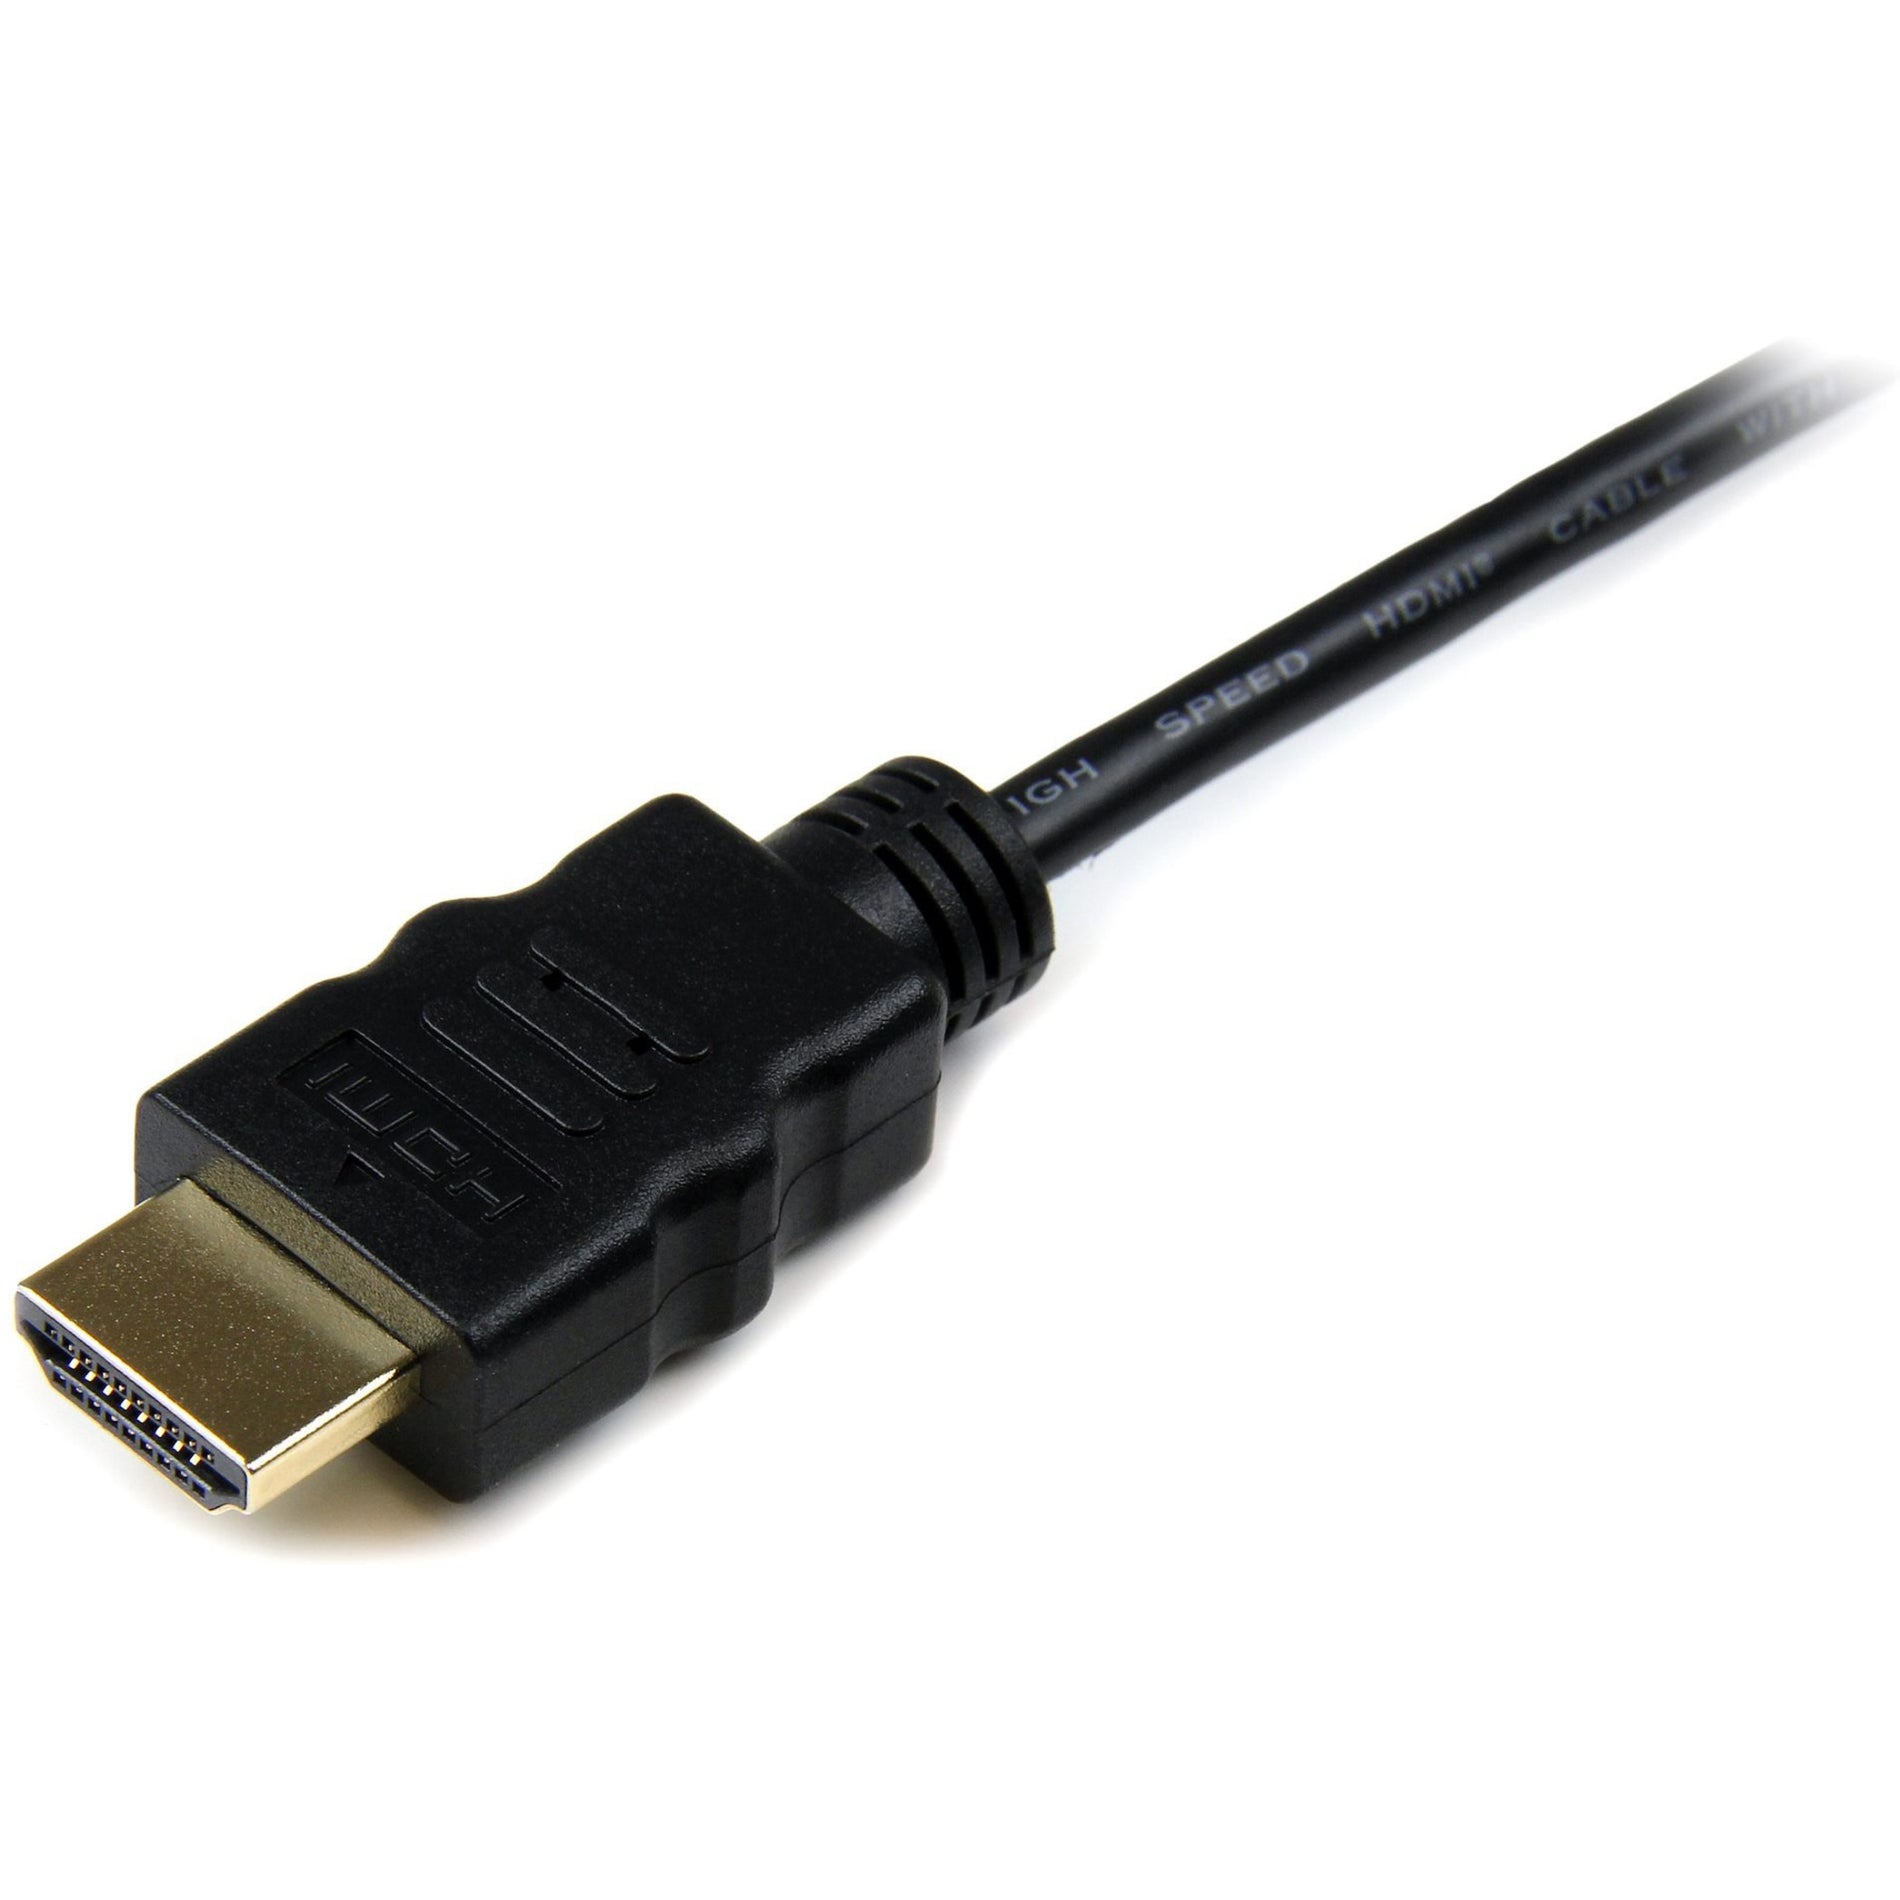 StarTech.com  HDMIADMM3  3 英尺 高速 HDMI 线缆 与 以太网 - HDMI 至 HDMI 微型 - M/M， 支持 4K， 镀金 连接器， 黑色 施泰科品牌。施泰科 是品牌名称。